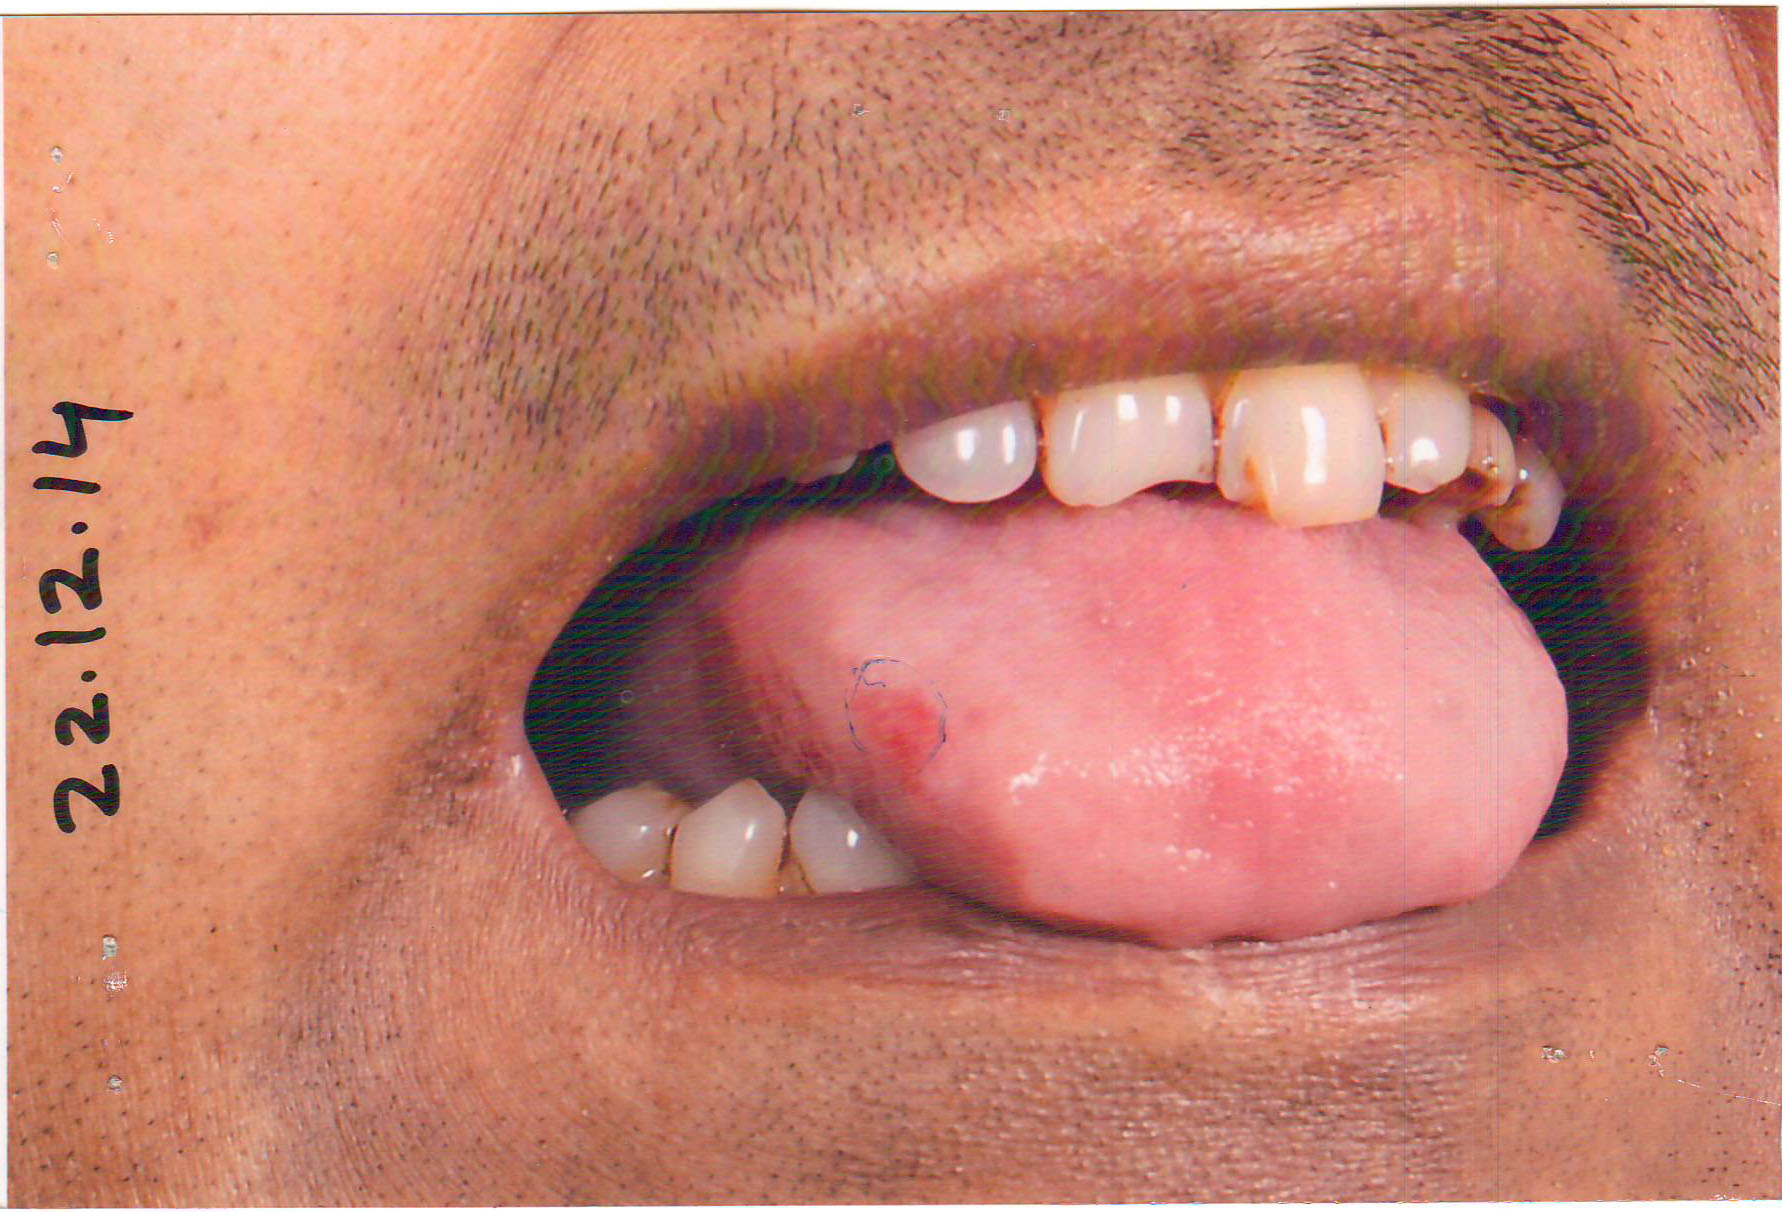 Rajesh-gupta-Tongue-cancer-0006